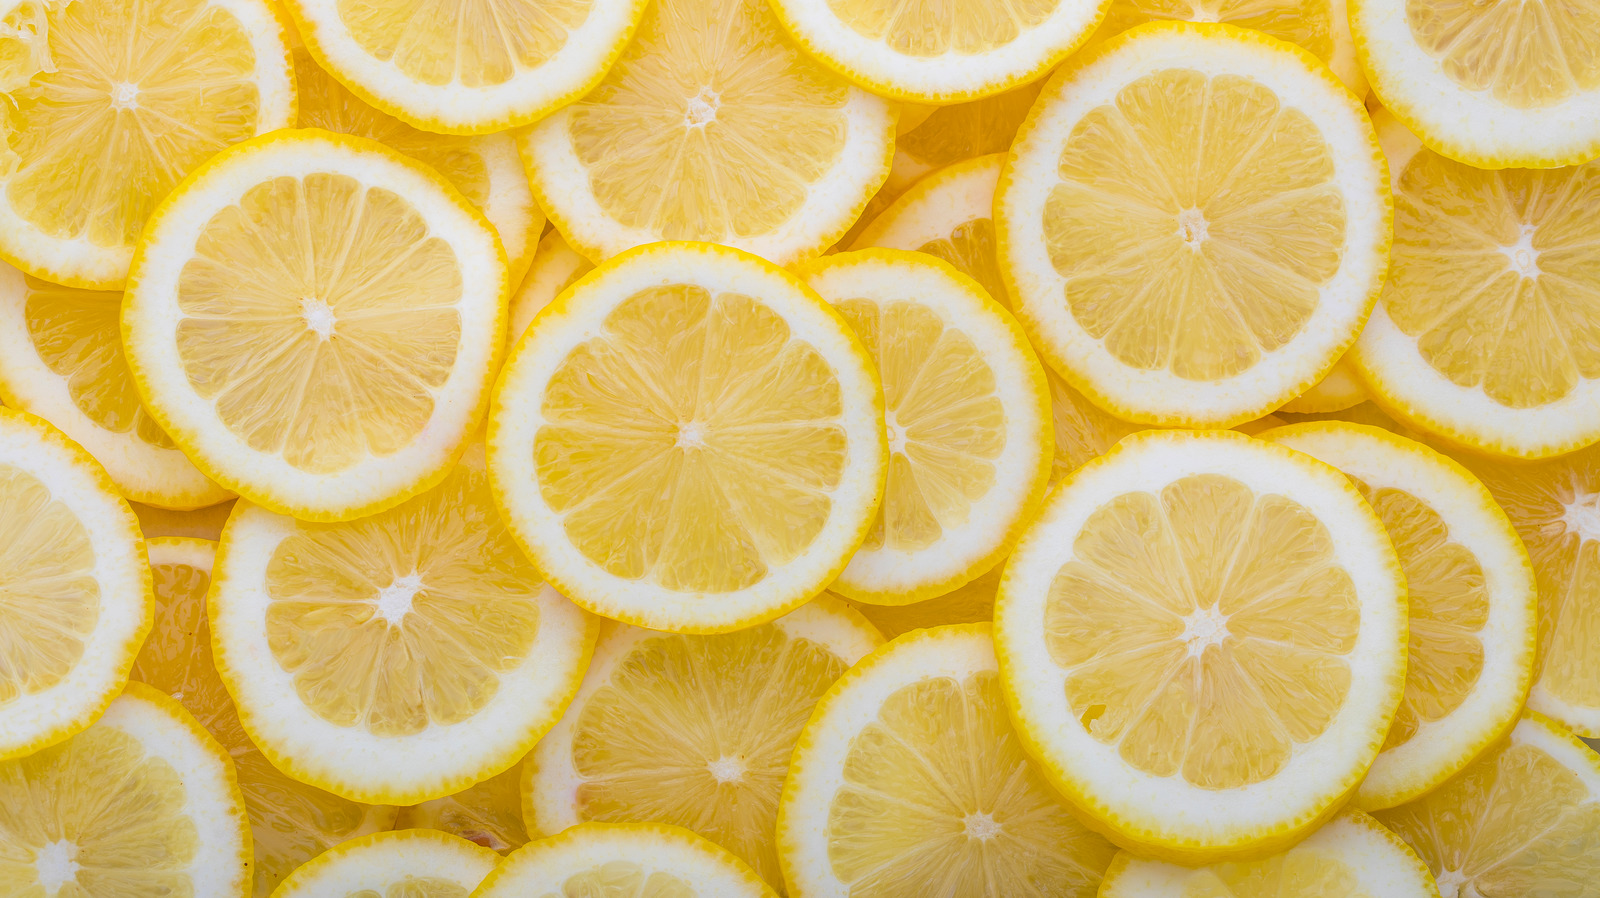 13 Science-Backed Health Benefits of Eating Lemon